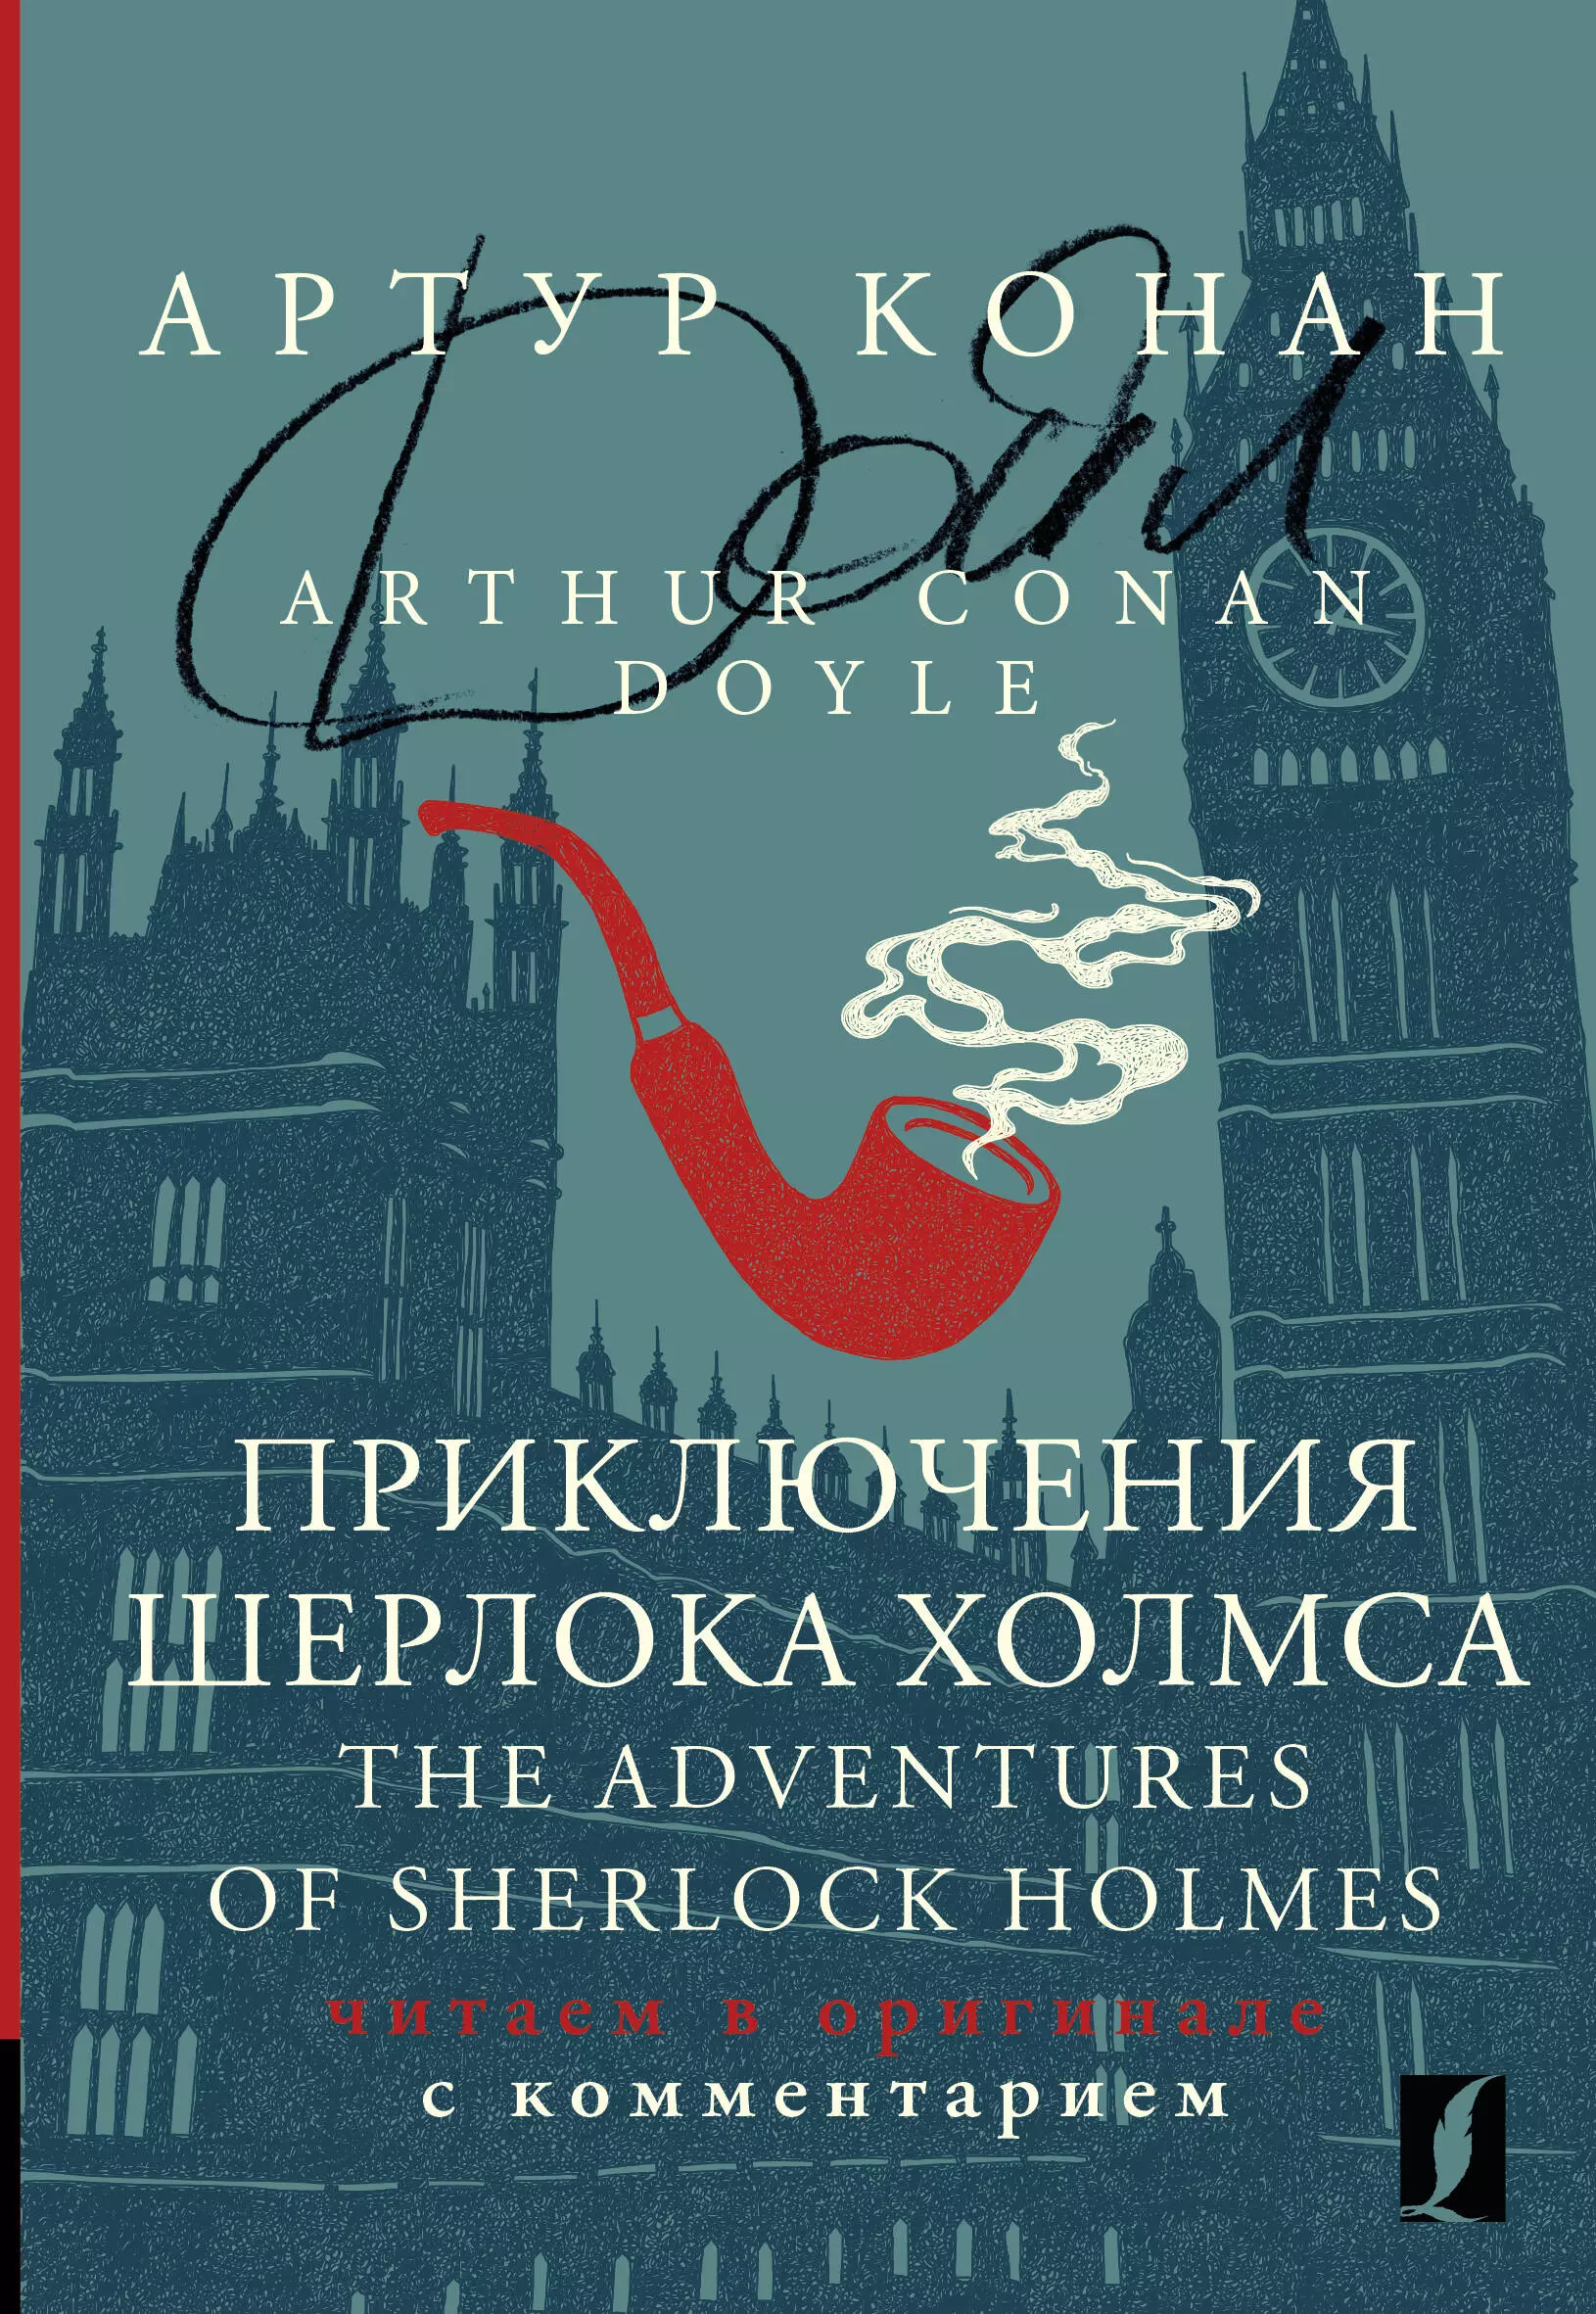 дойл артур конан the adventures of sherlock holmes iv приключения шерлока холмса iv на англ яз Дойл Артур Конан Приключения Шерлока Холмса / The Adventures of Sherlock Holmes: читаем в оригинале с комментарием